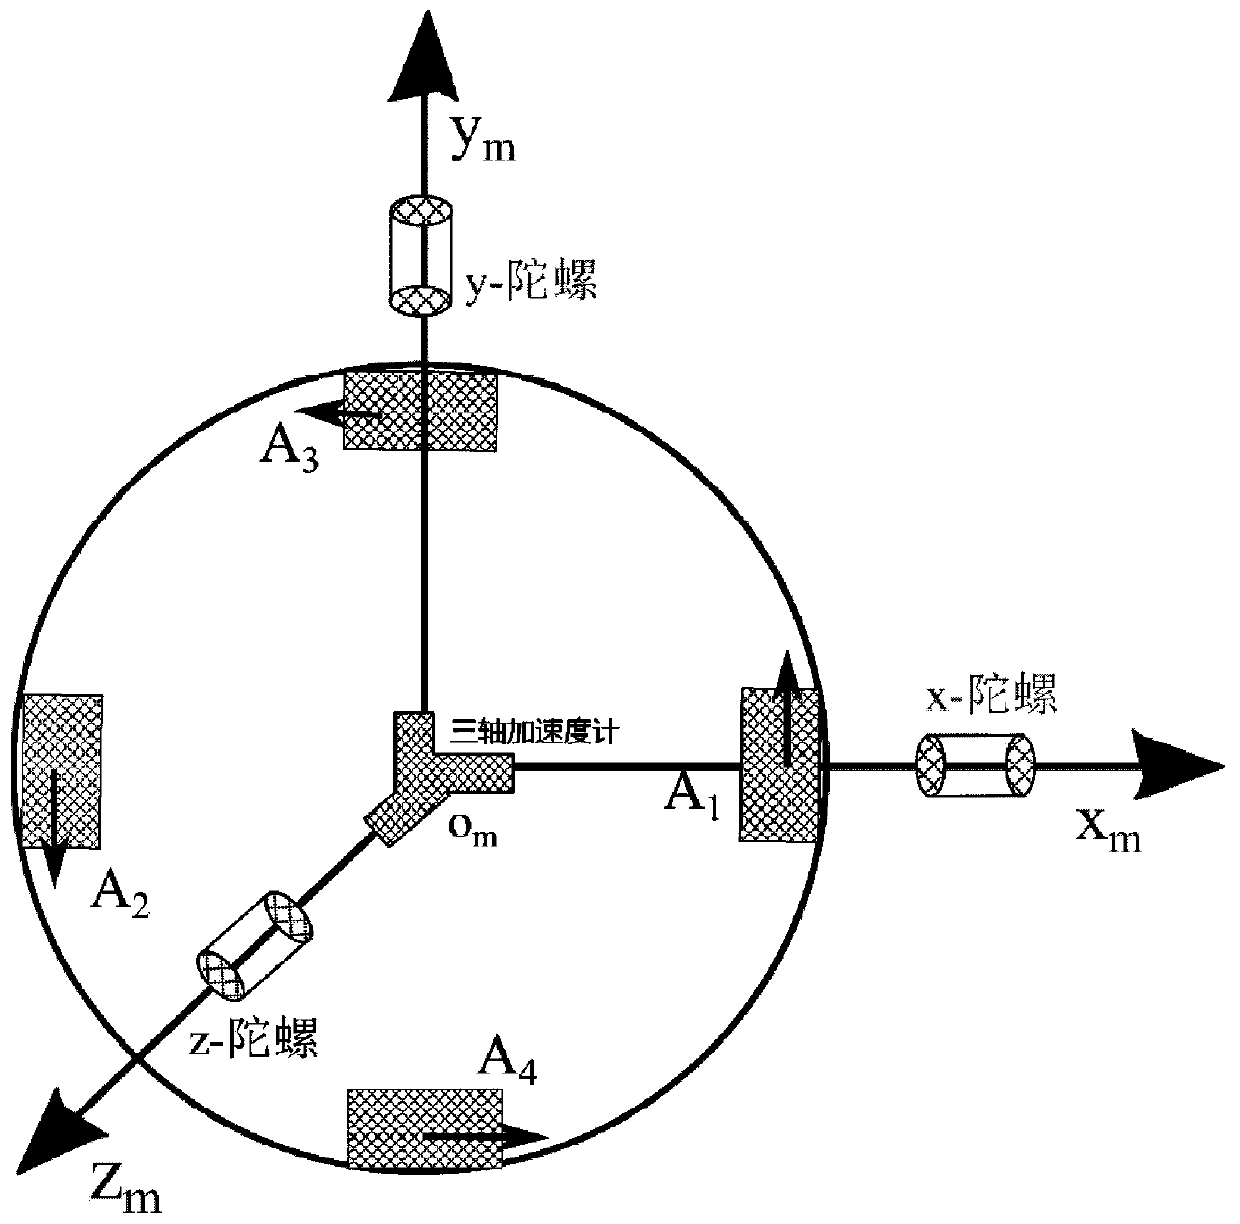 Rotational accelerometer gravity gradiometer angular motion error compensation device and method